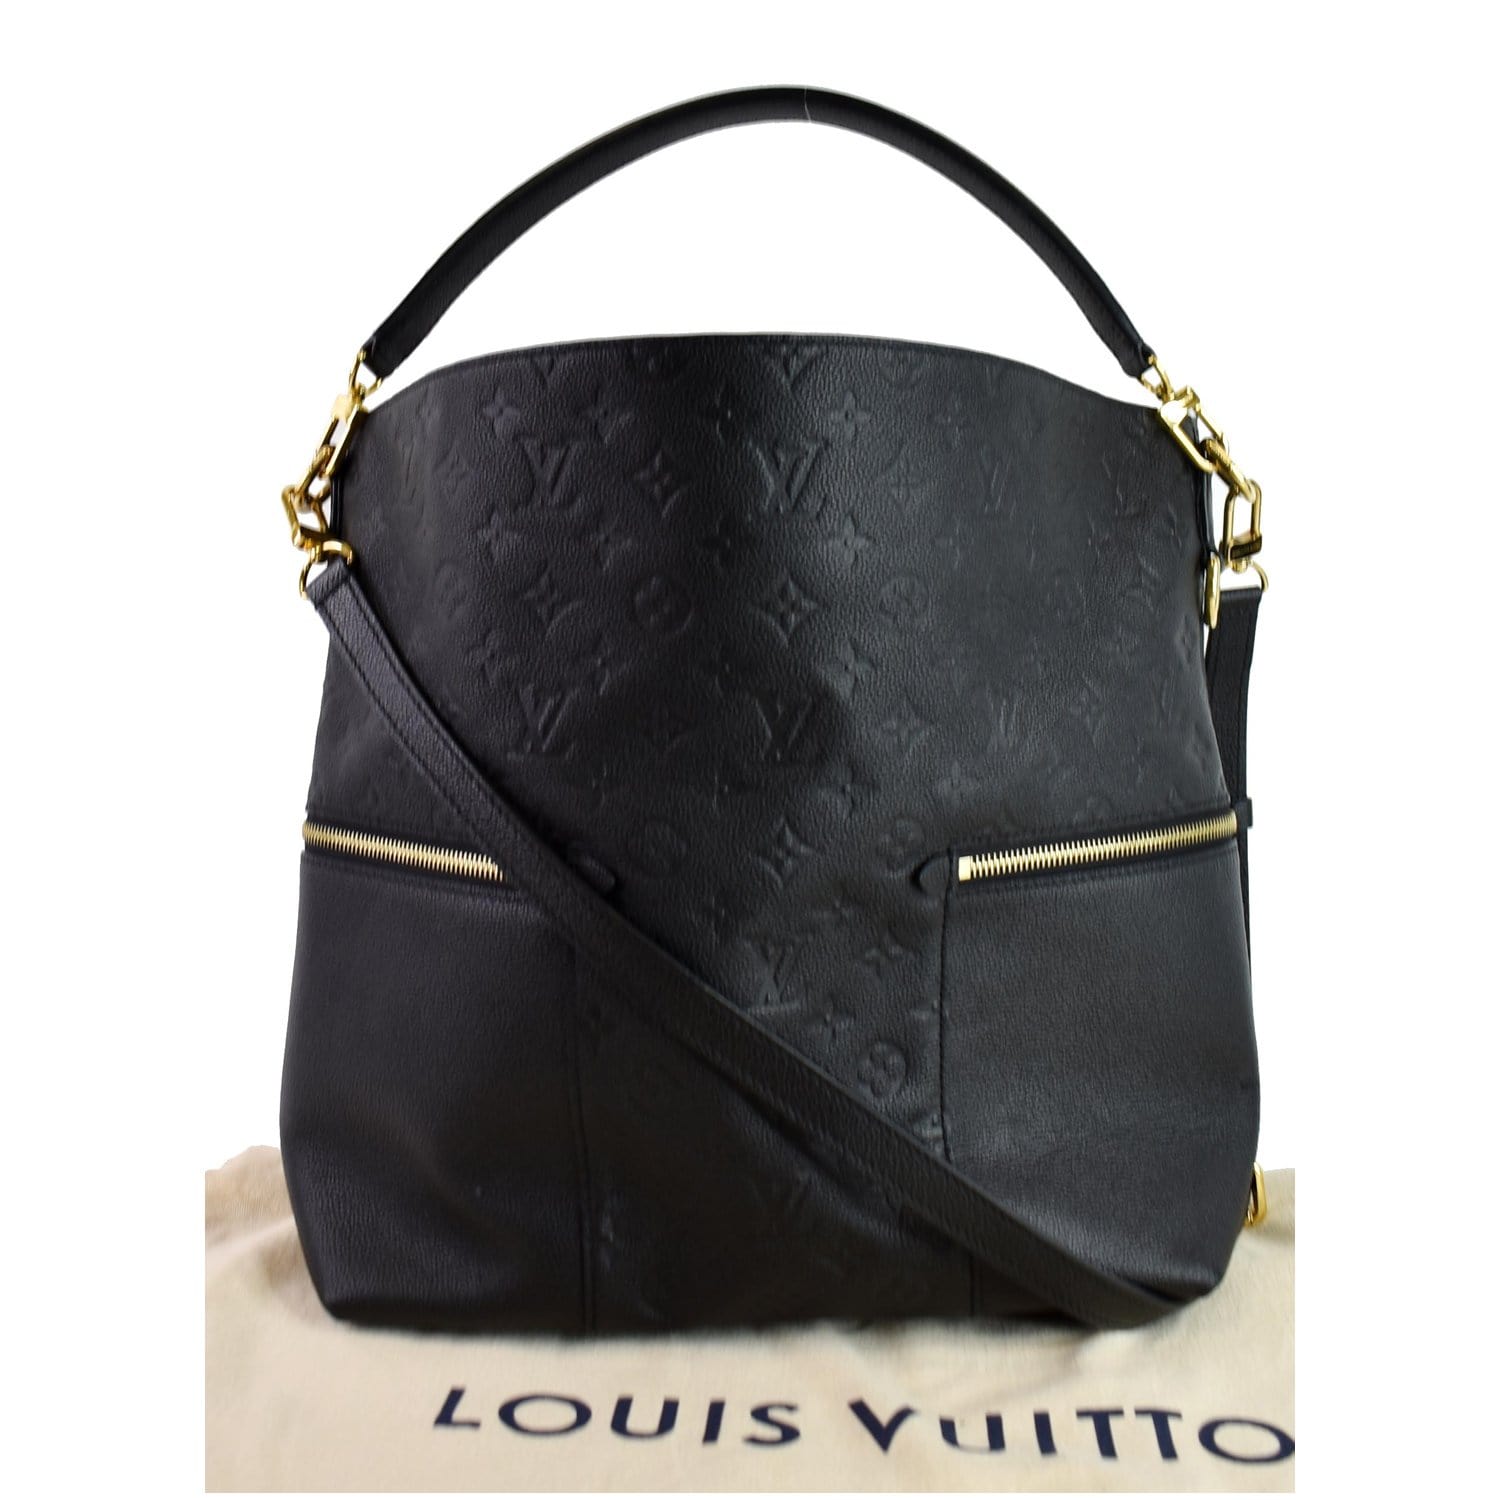 louis vuitton black leather handbags